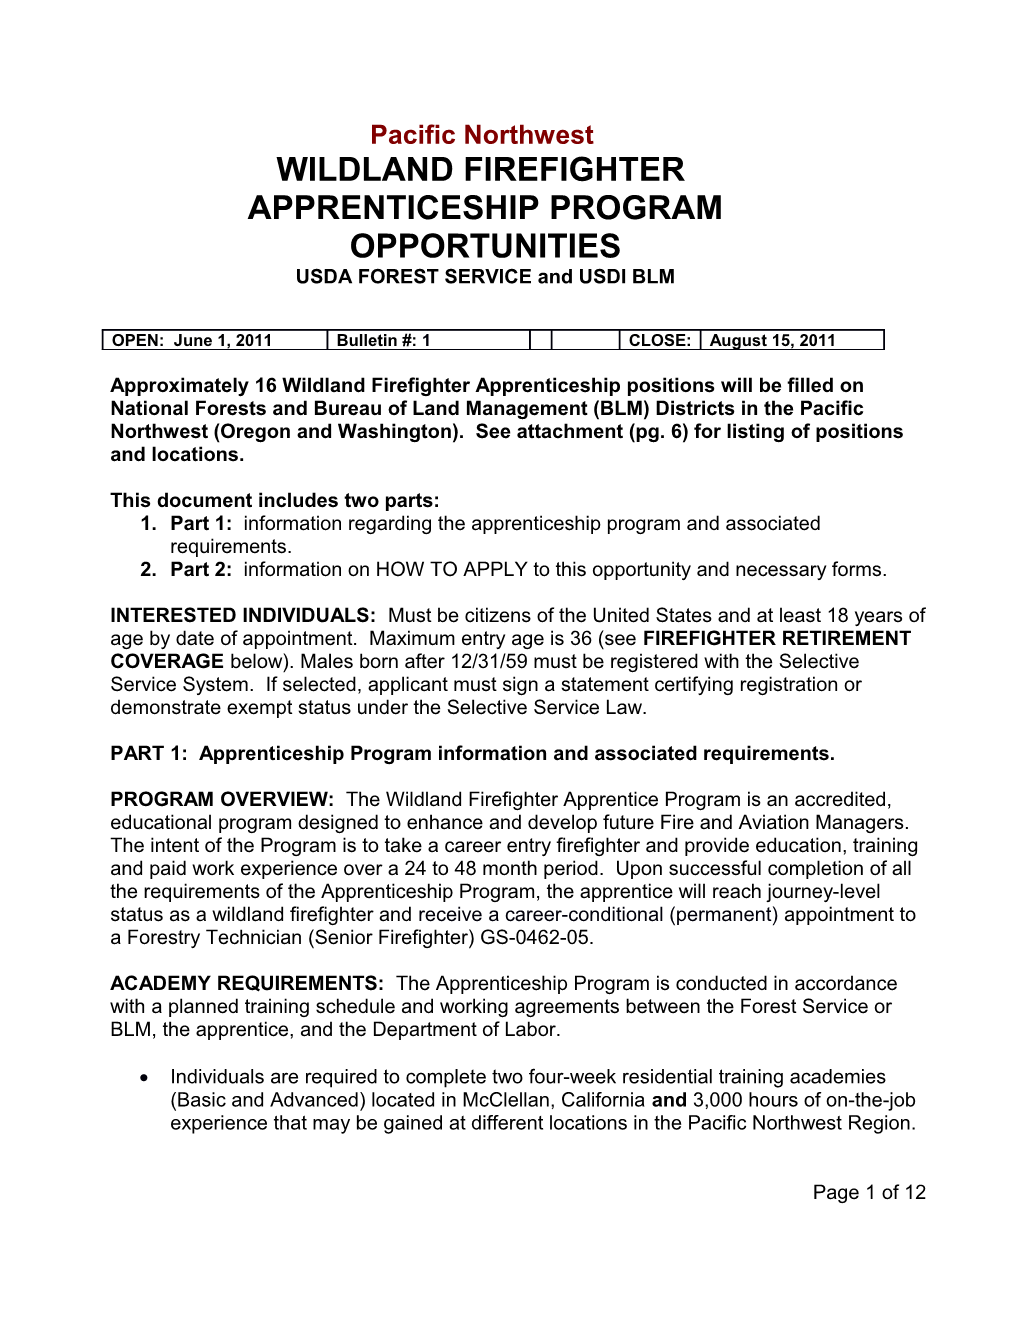 Wildland Firefighter Apprenticeship Program Opportunities